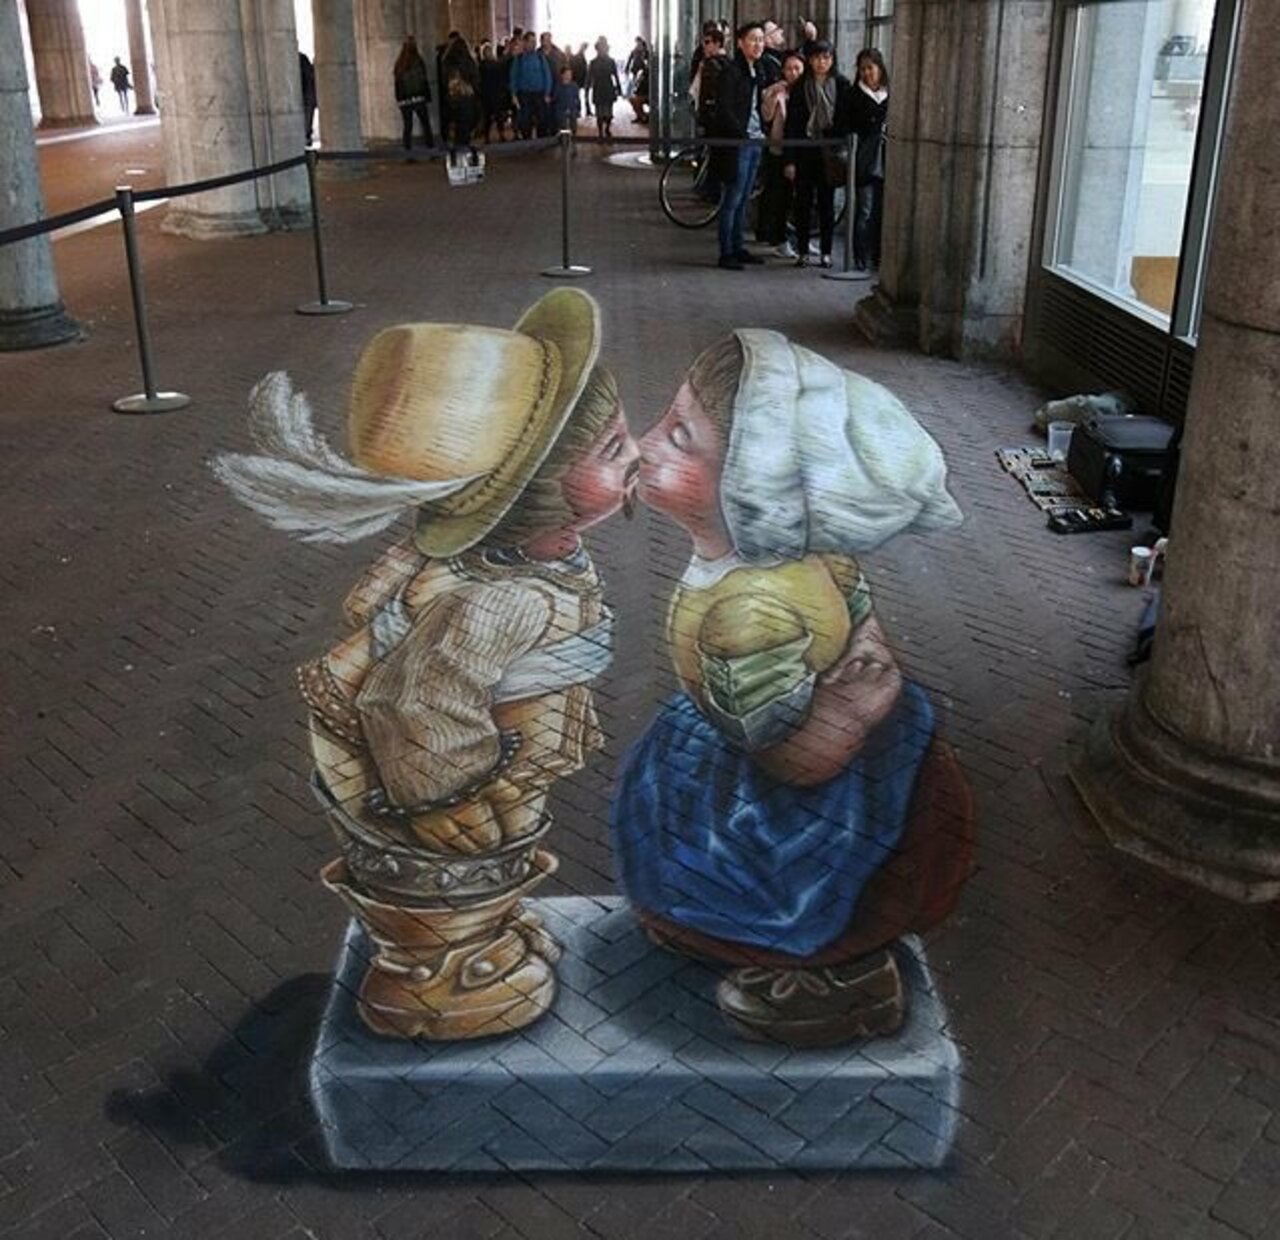 RT @Jill0841: Vermeer & Rembrandt meets Anamorphic 3D Street Art by Leon Keer 

#art #mural #graffiti #streetart https://t.co/5B4z0gO3Fw